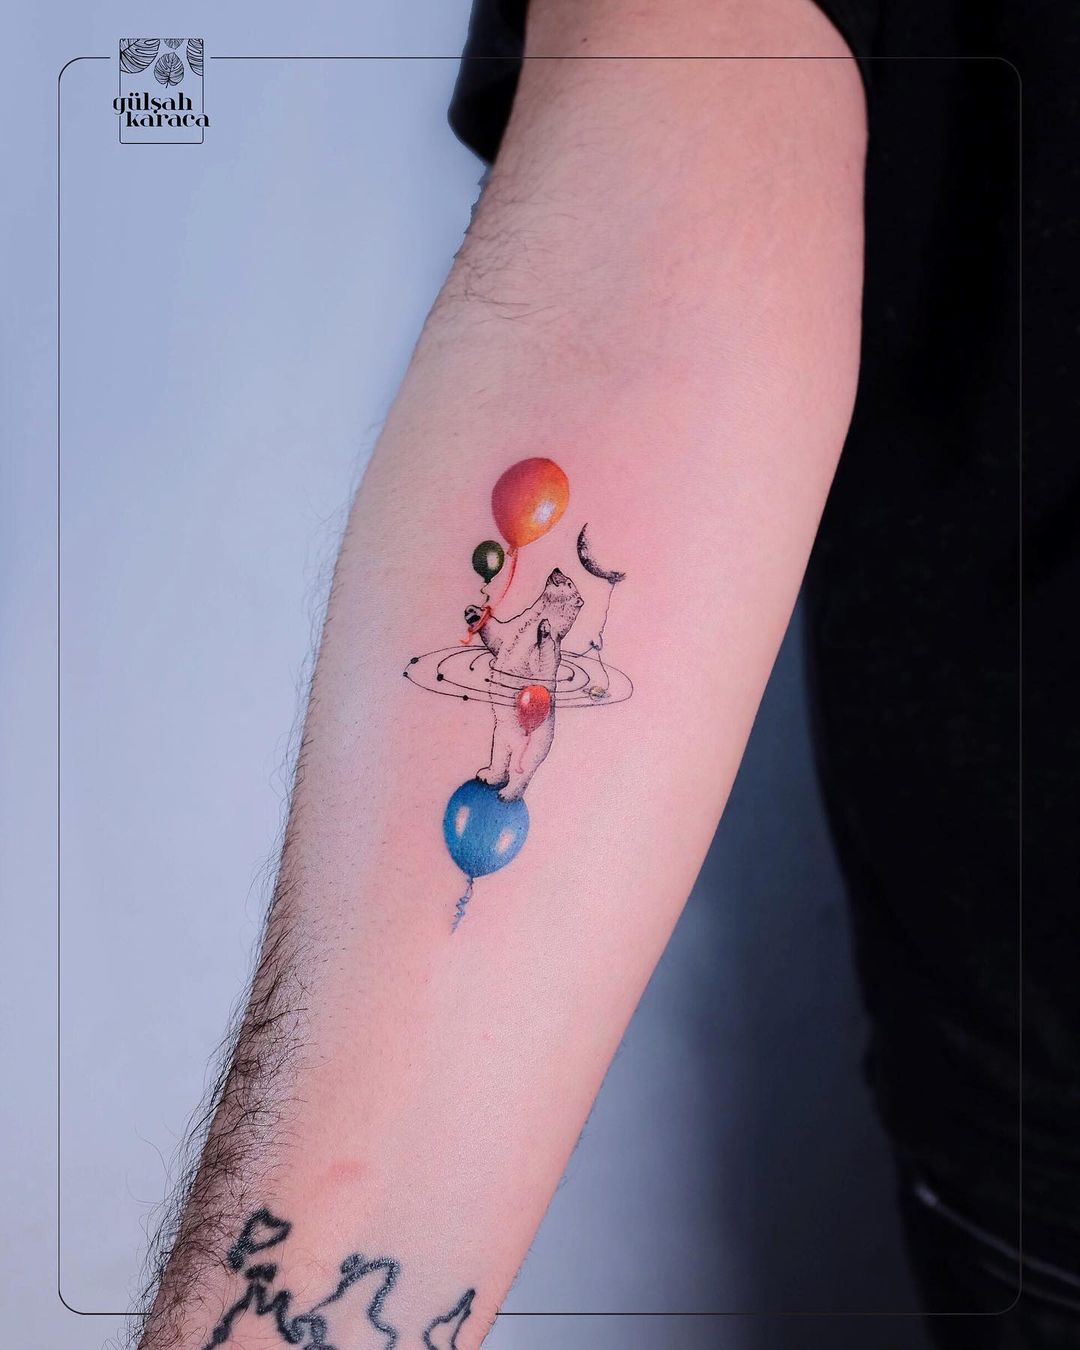 colorful balloon tattoo by gullsahkaraca